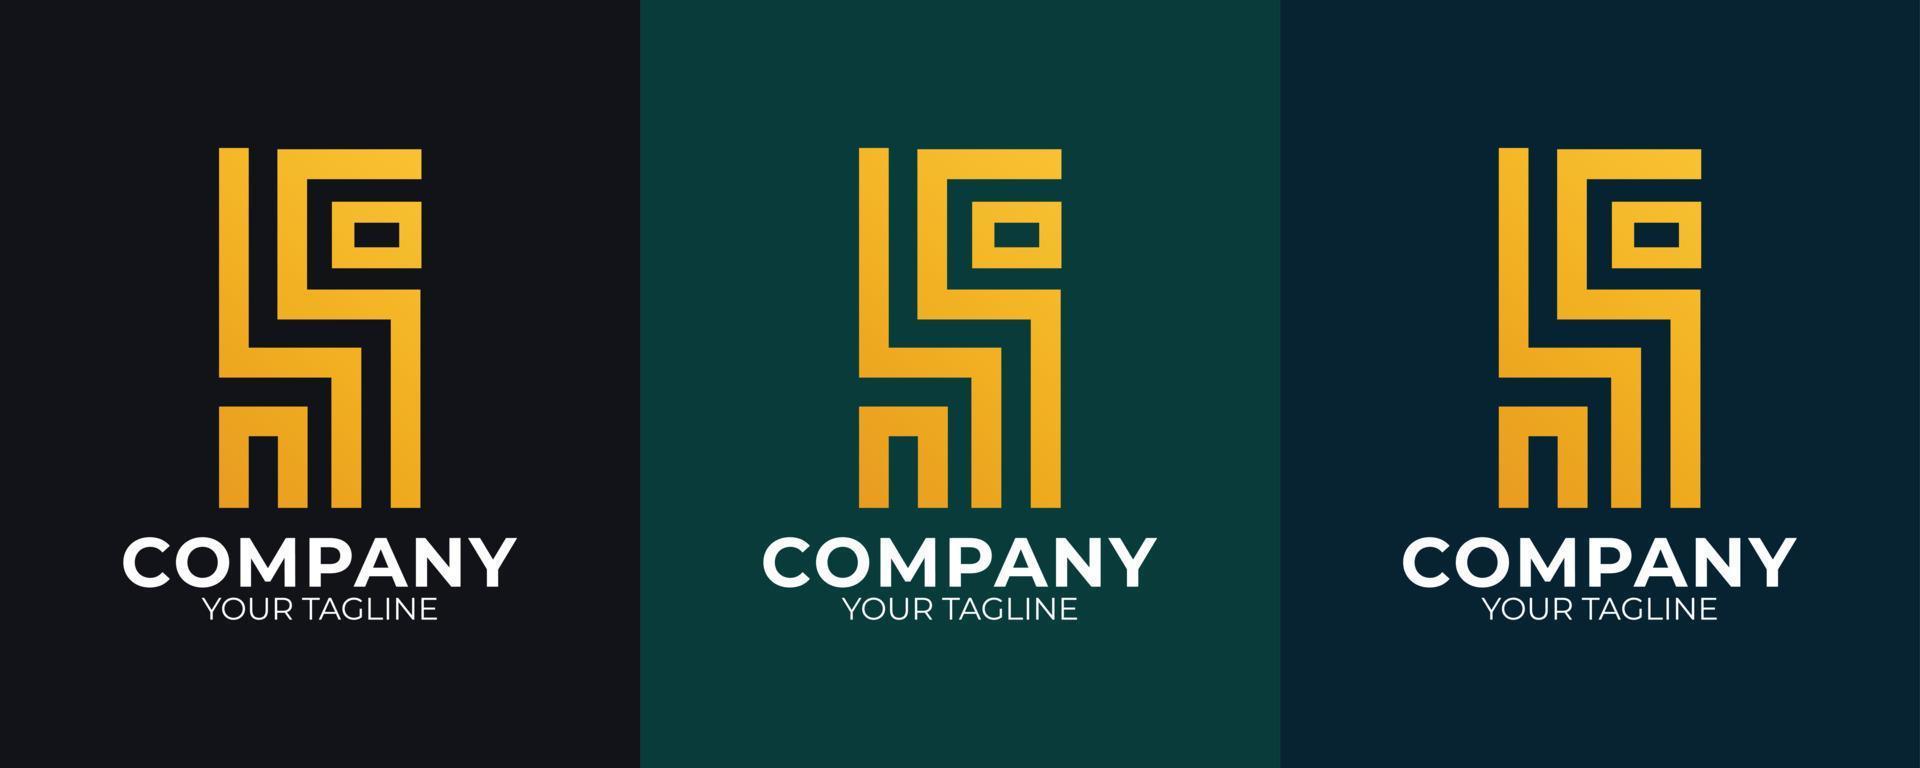 Real estate business clean modern luxury and minimalist logo brand identity design vector